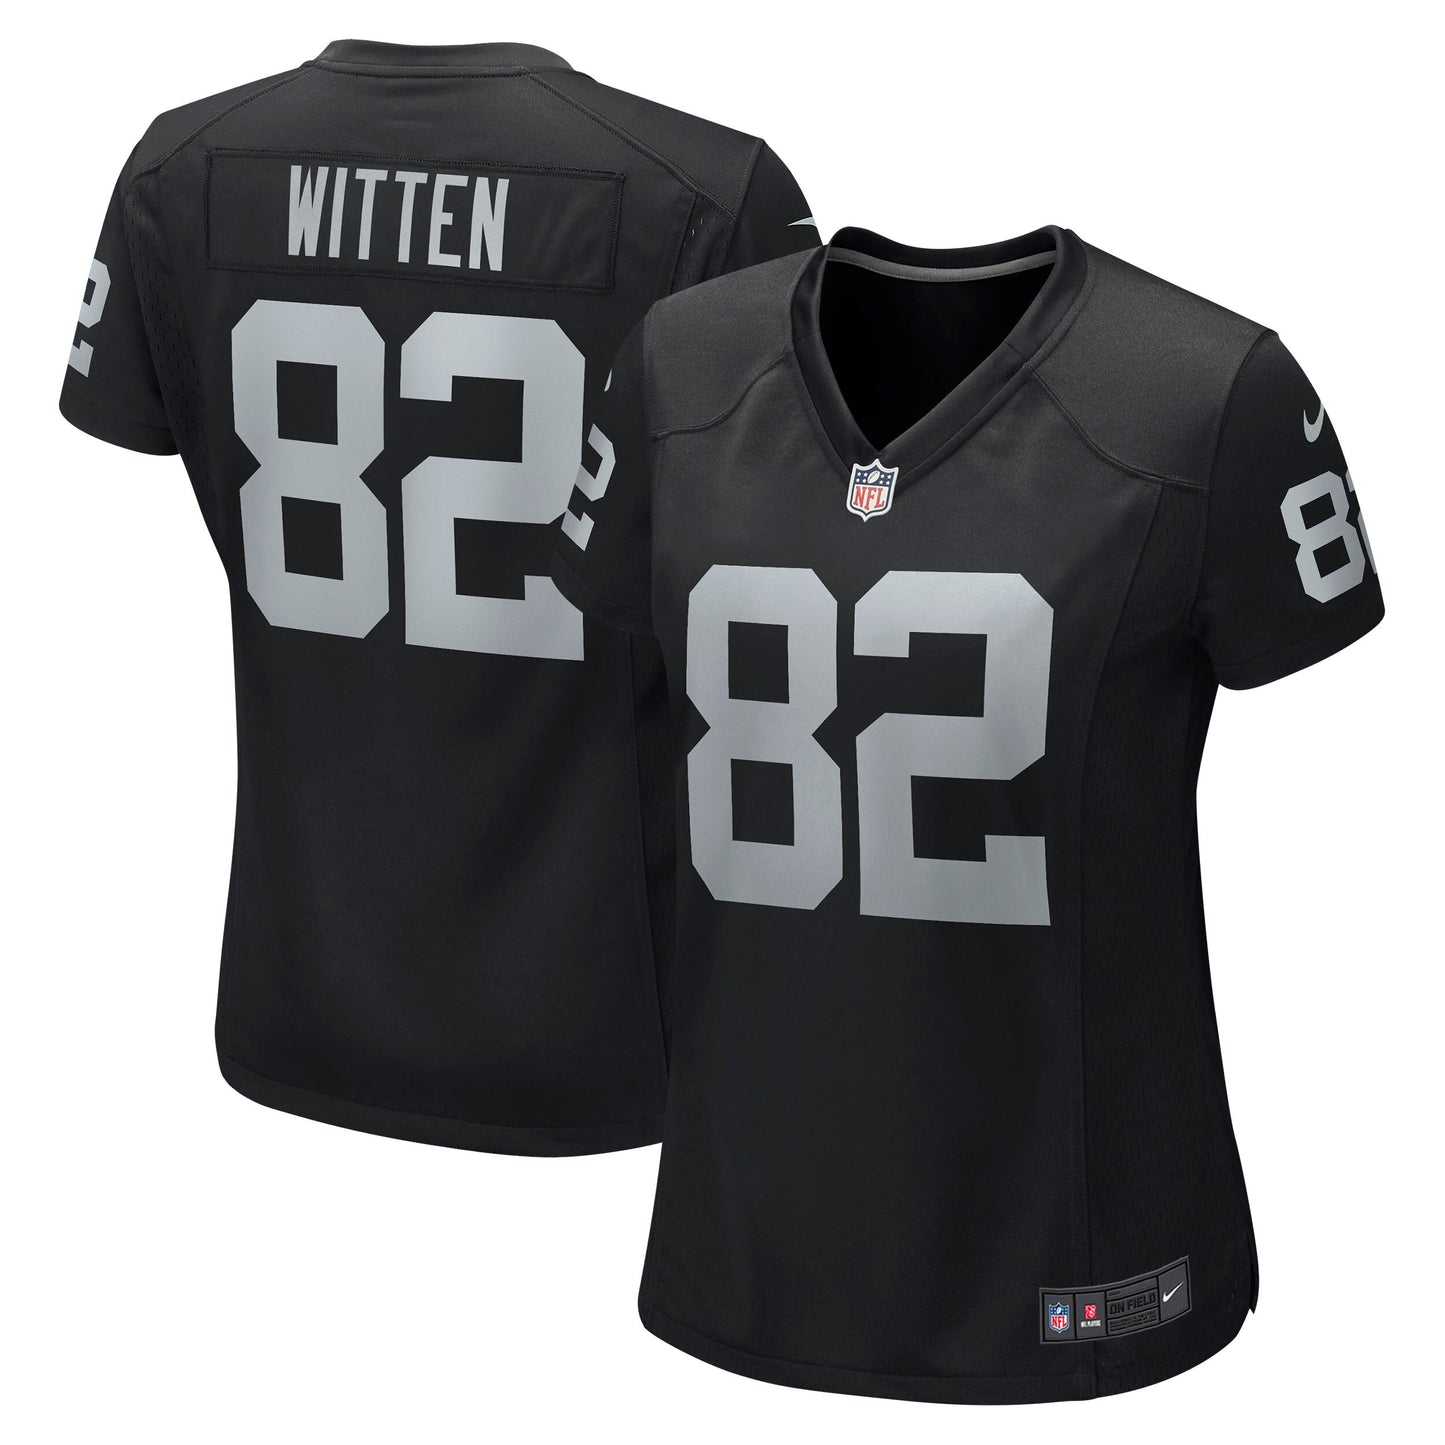 Jason Witten Las Vegas Raiders Nike Women's Game Jersey - Black